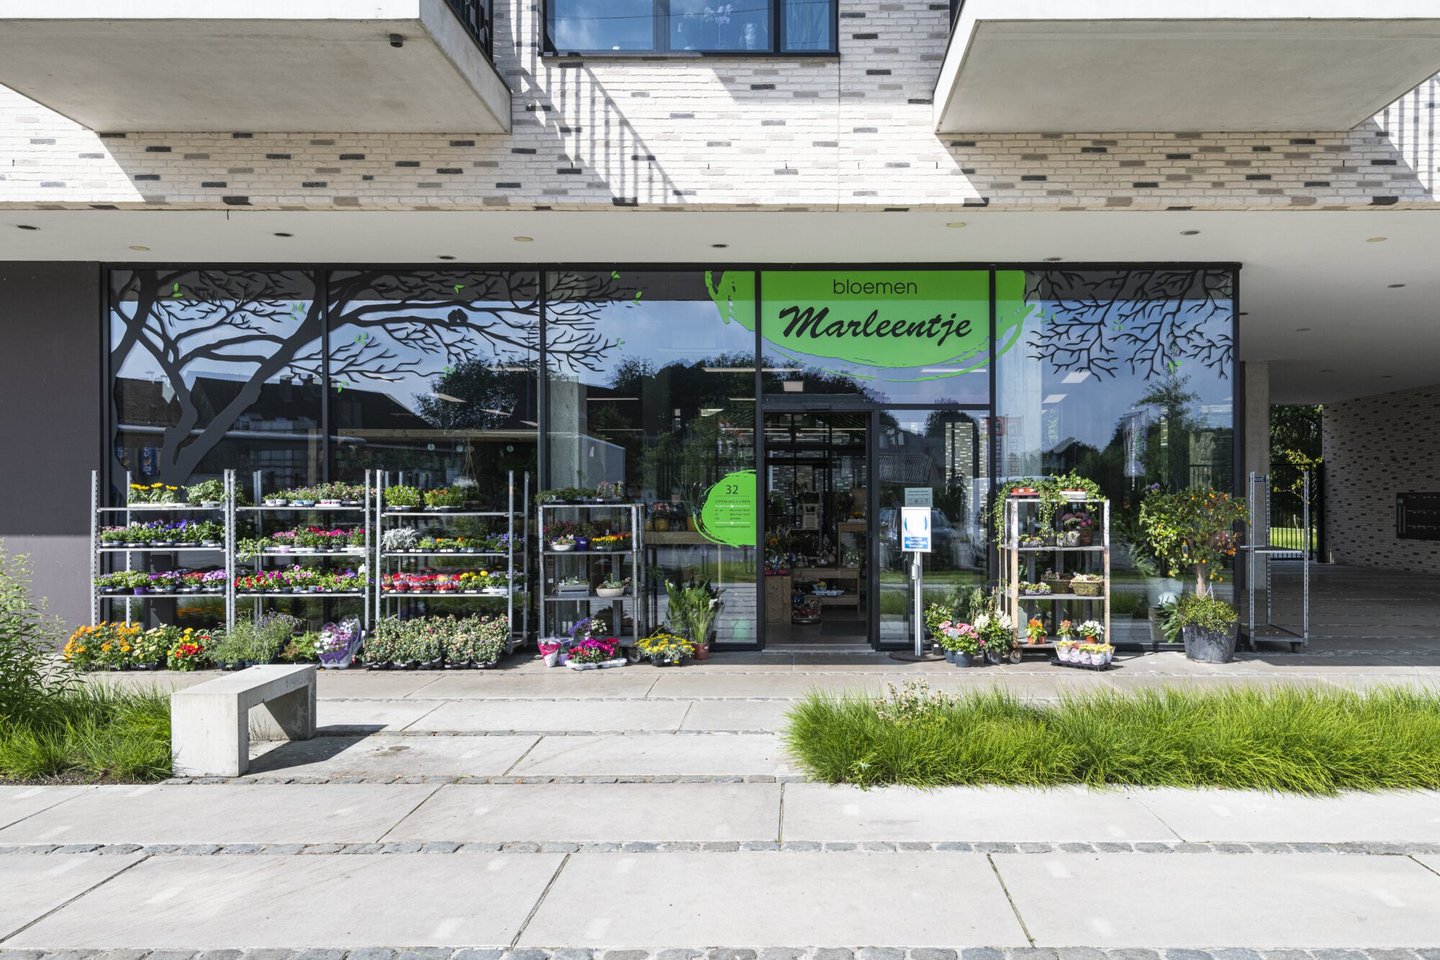 Etalage van bloemen- en plantenwinkel Marleentje in Wondelgem